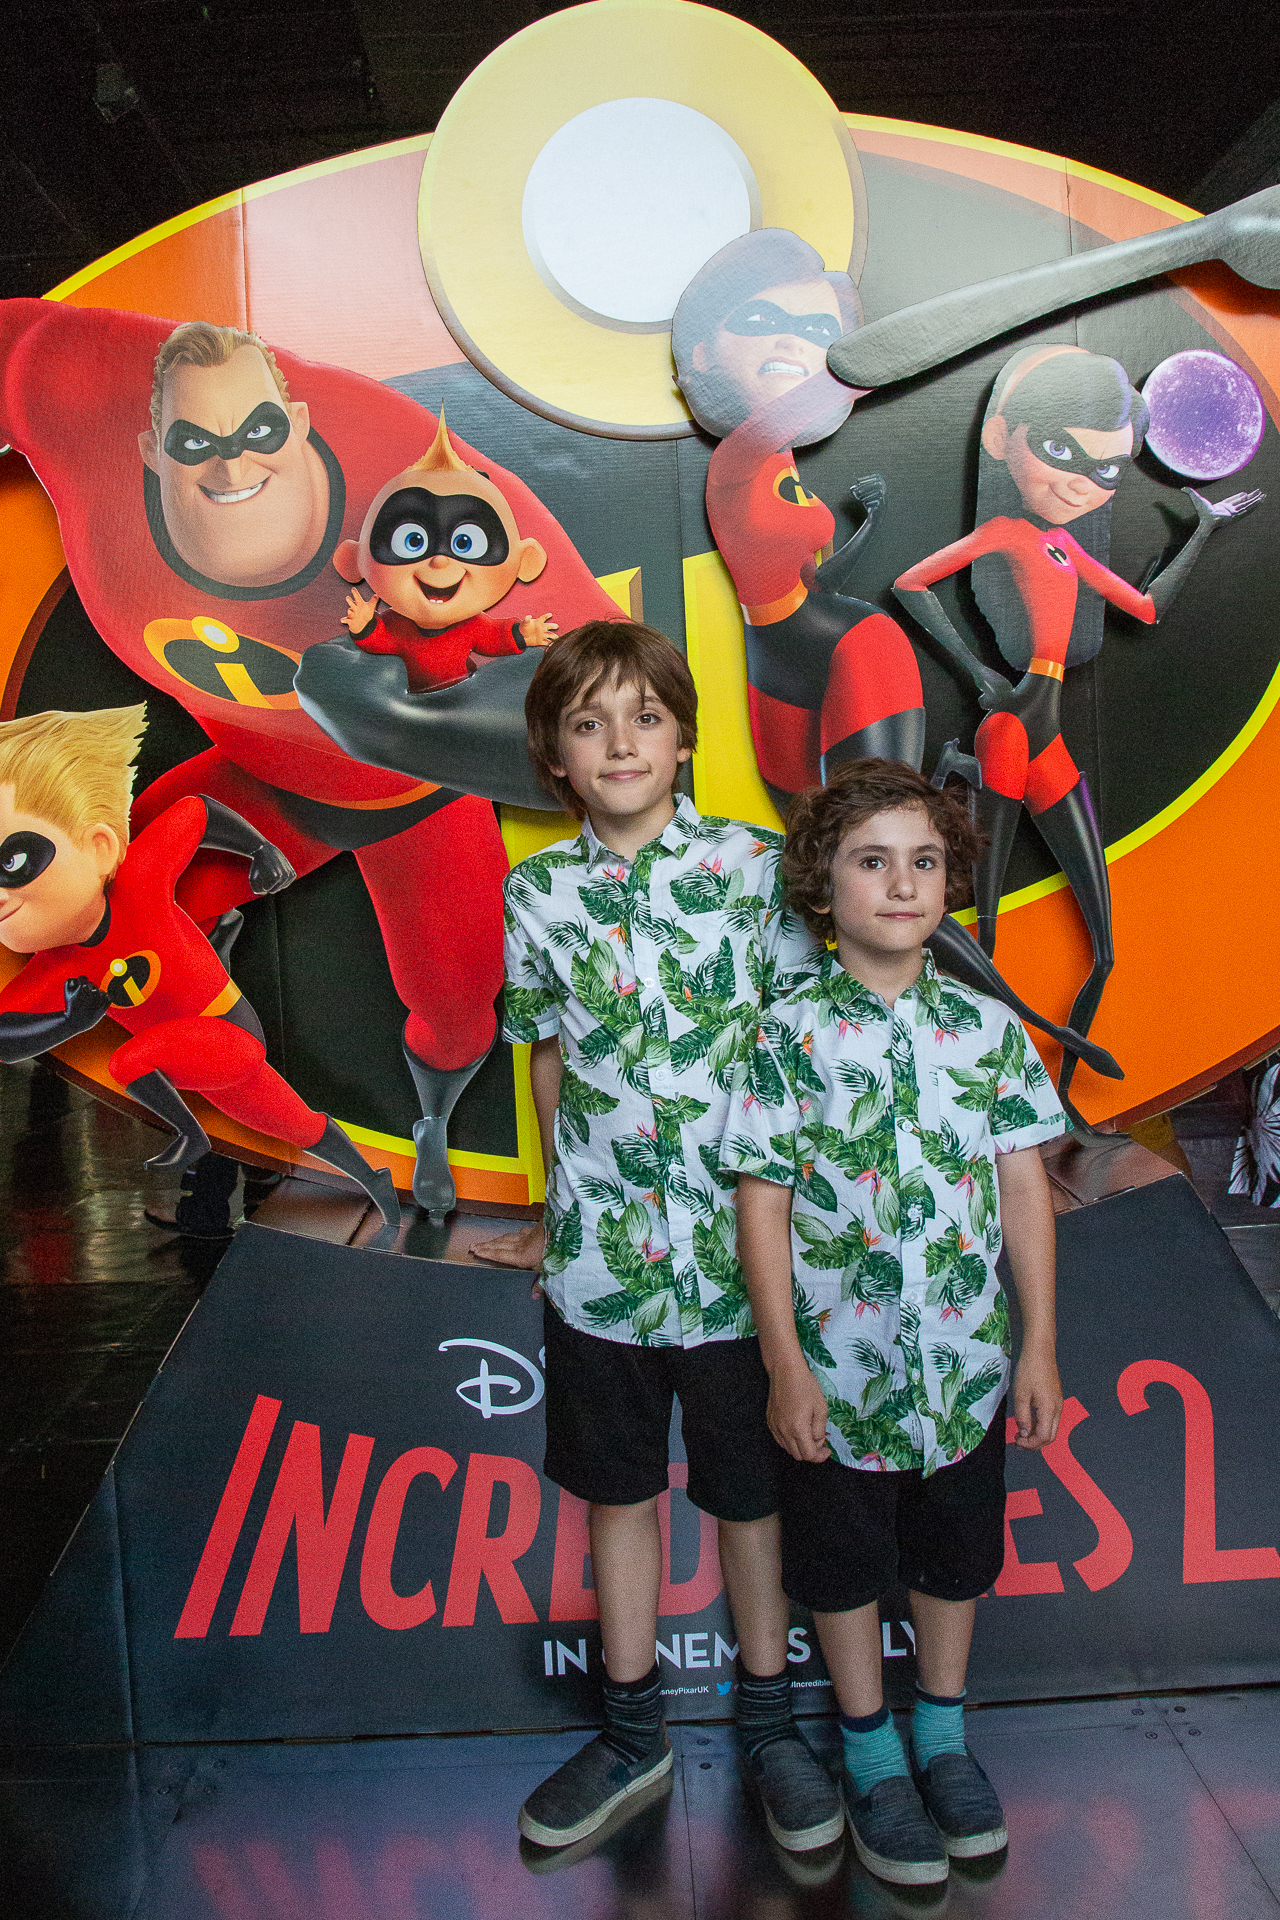 Honest Mum's kids enjoy Incredibles 2 premiere